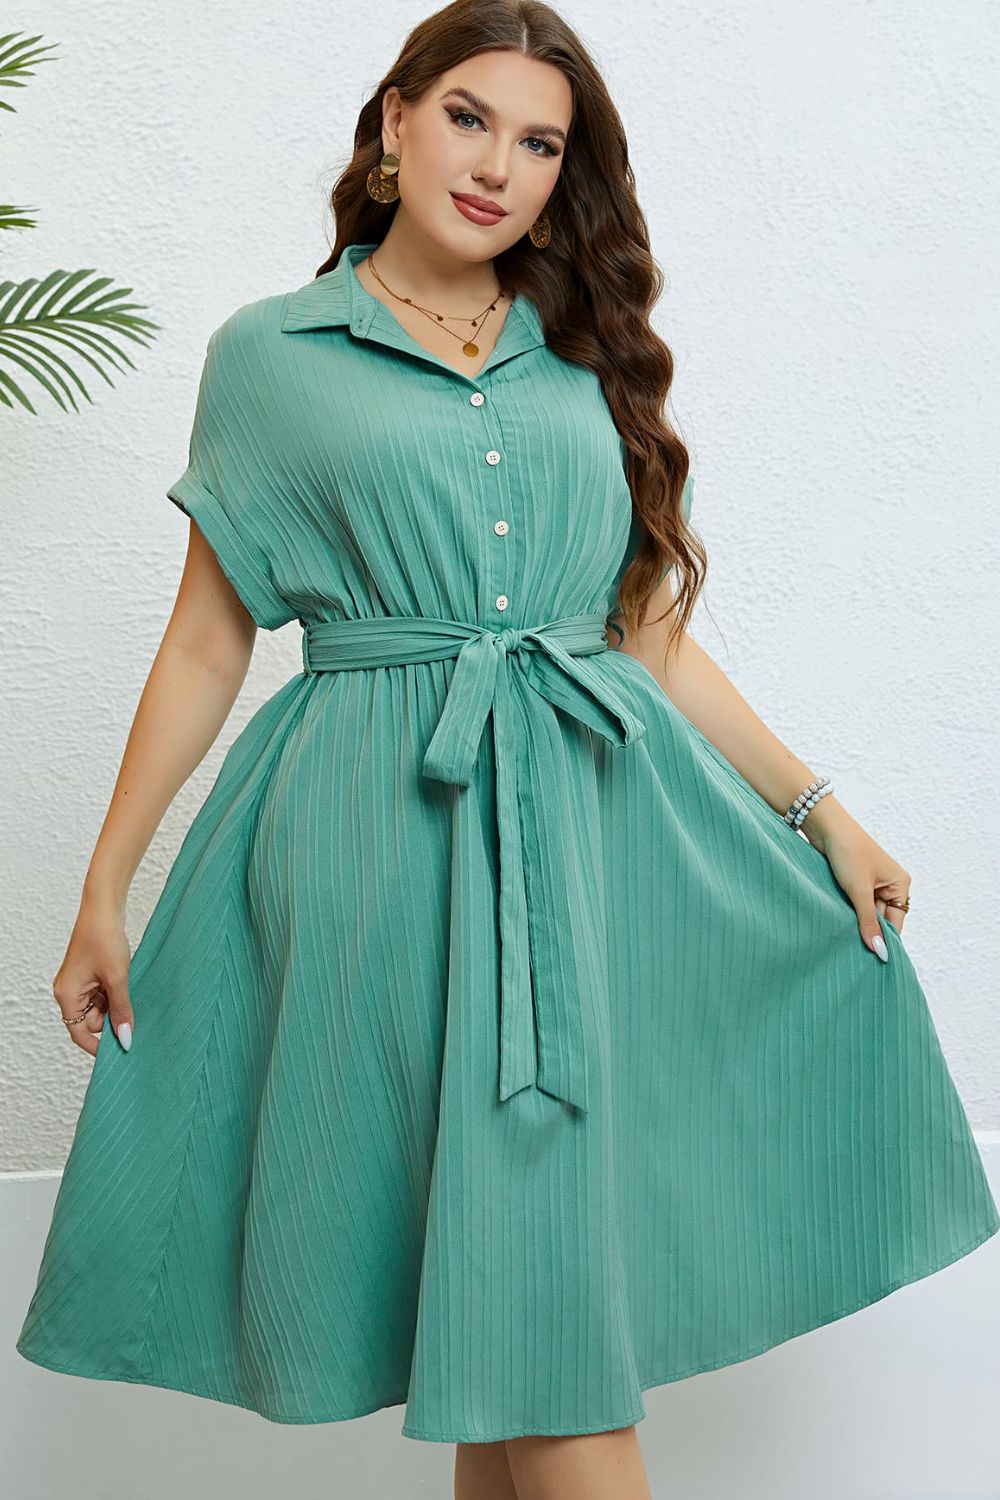 Rachel's Grace Shirt Dress -Turquoise